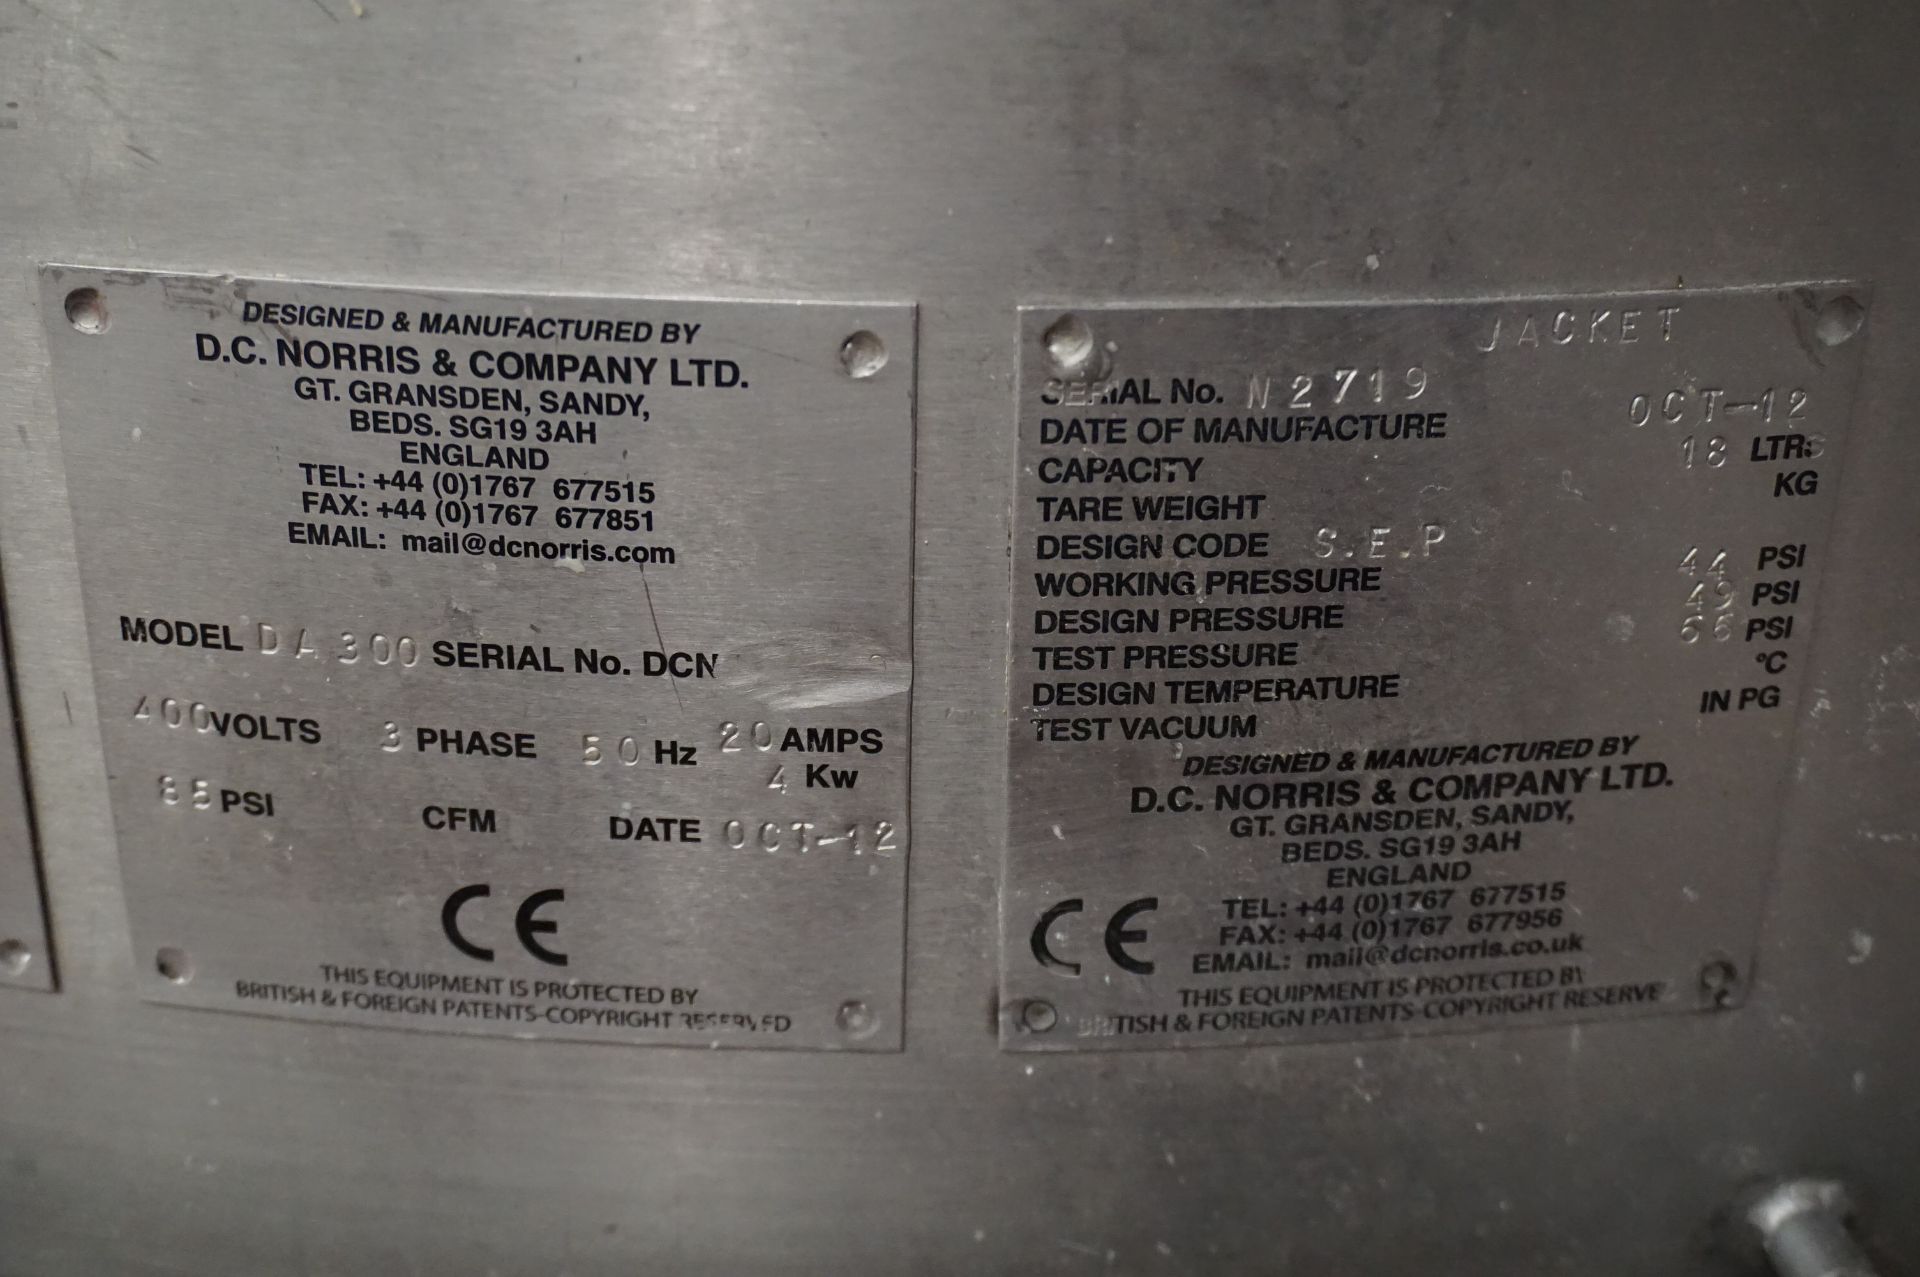 DC Norris, Model: DA 300, 300L pressurised glycol cooling vat, Serial No. N2719 (2012) with - Image 5 of 8